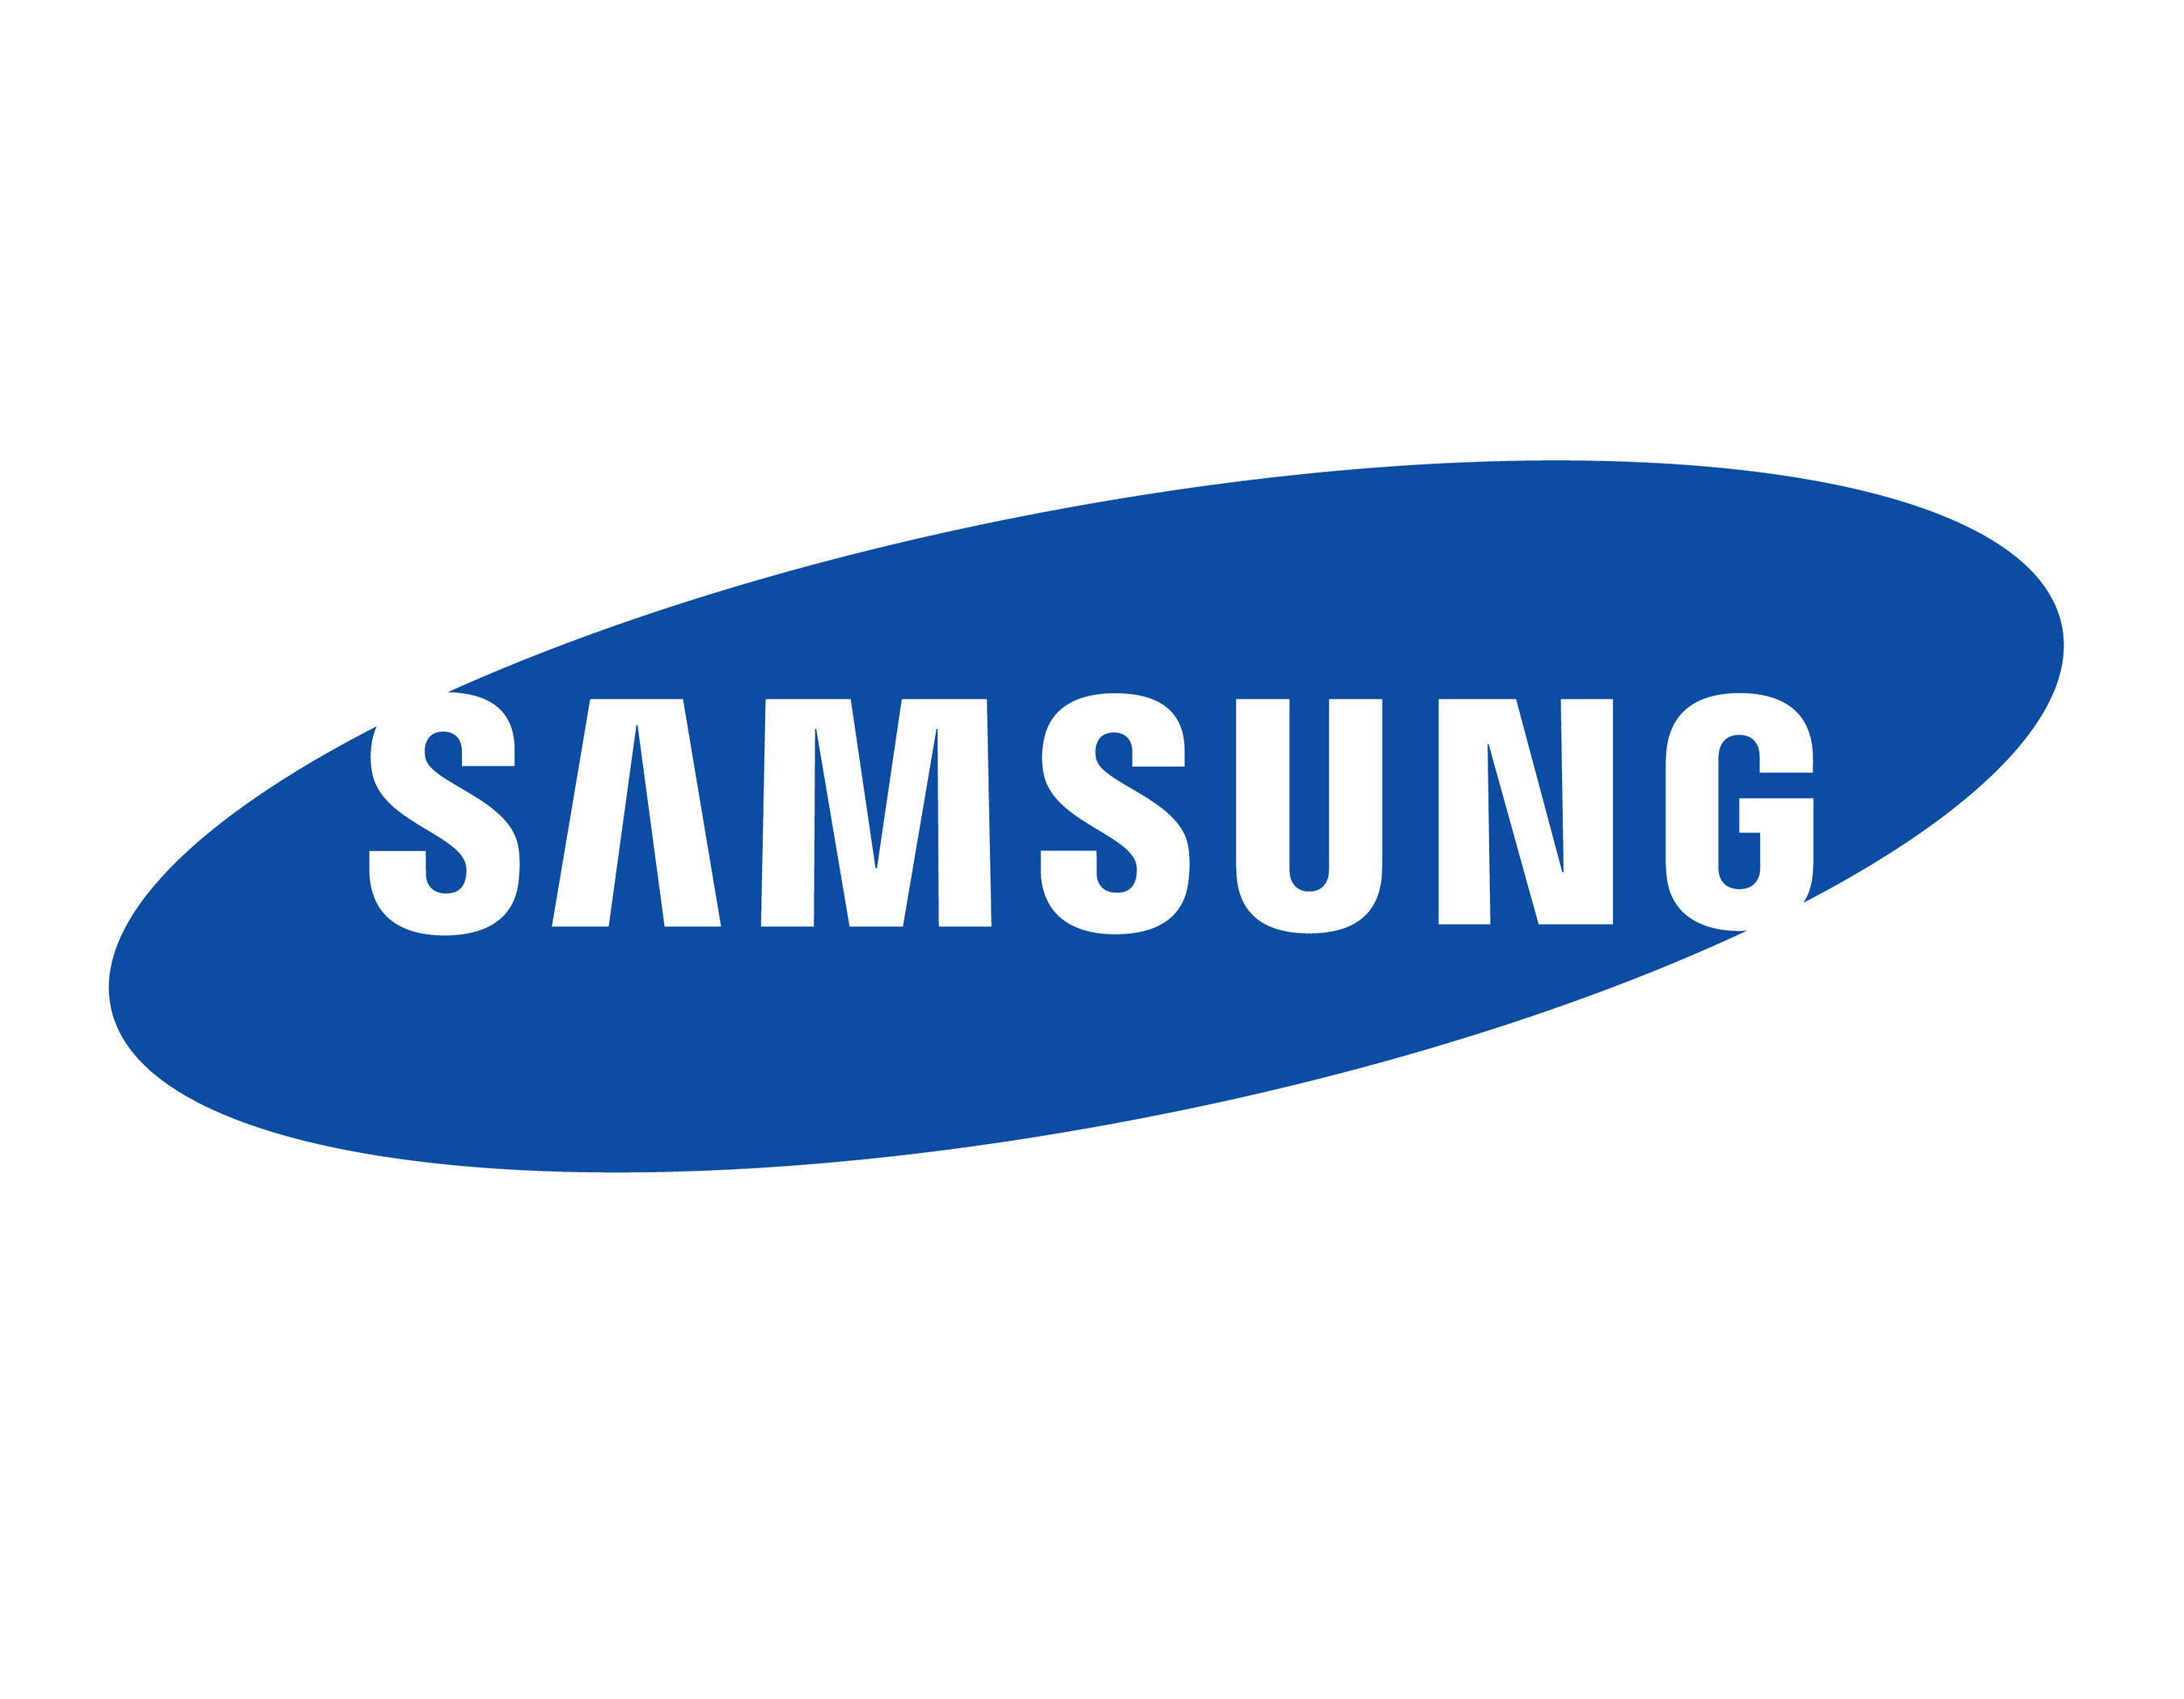 Samsung logo. (PRNewsFoto/Fingerprint) (PRNewsFoto/FINGERPRINT)